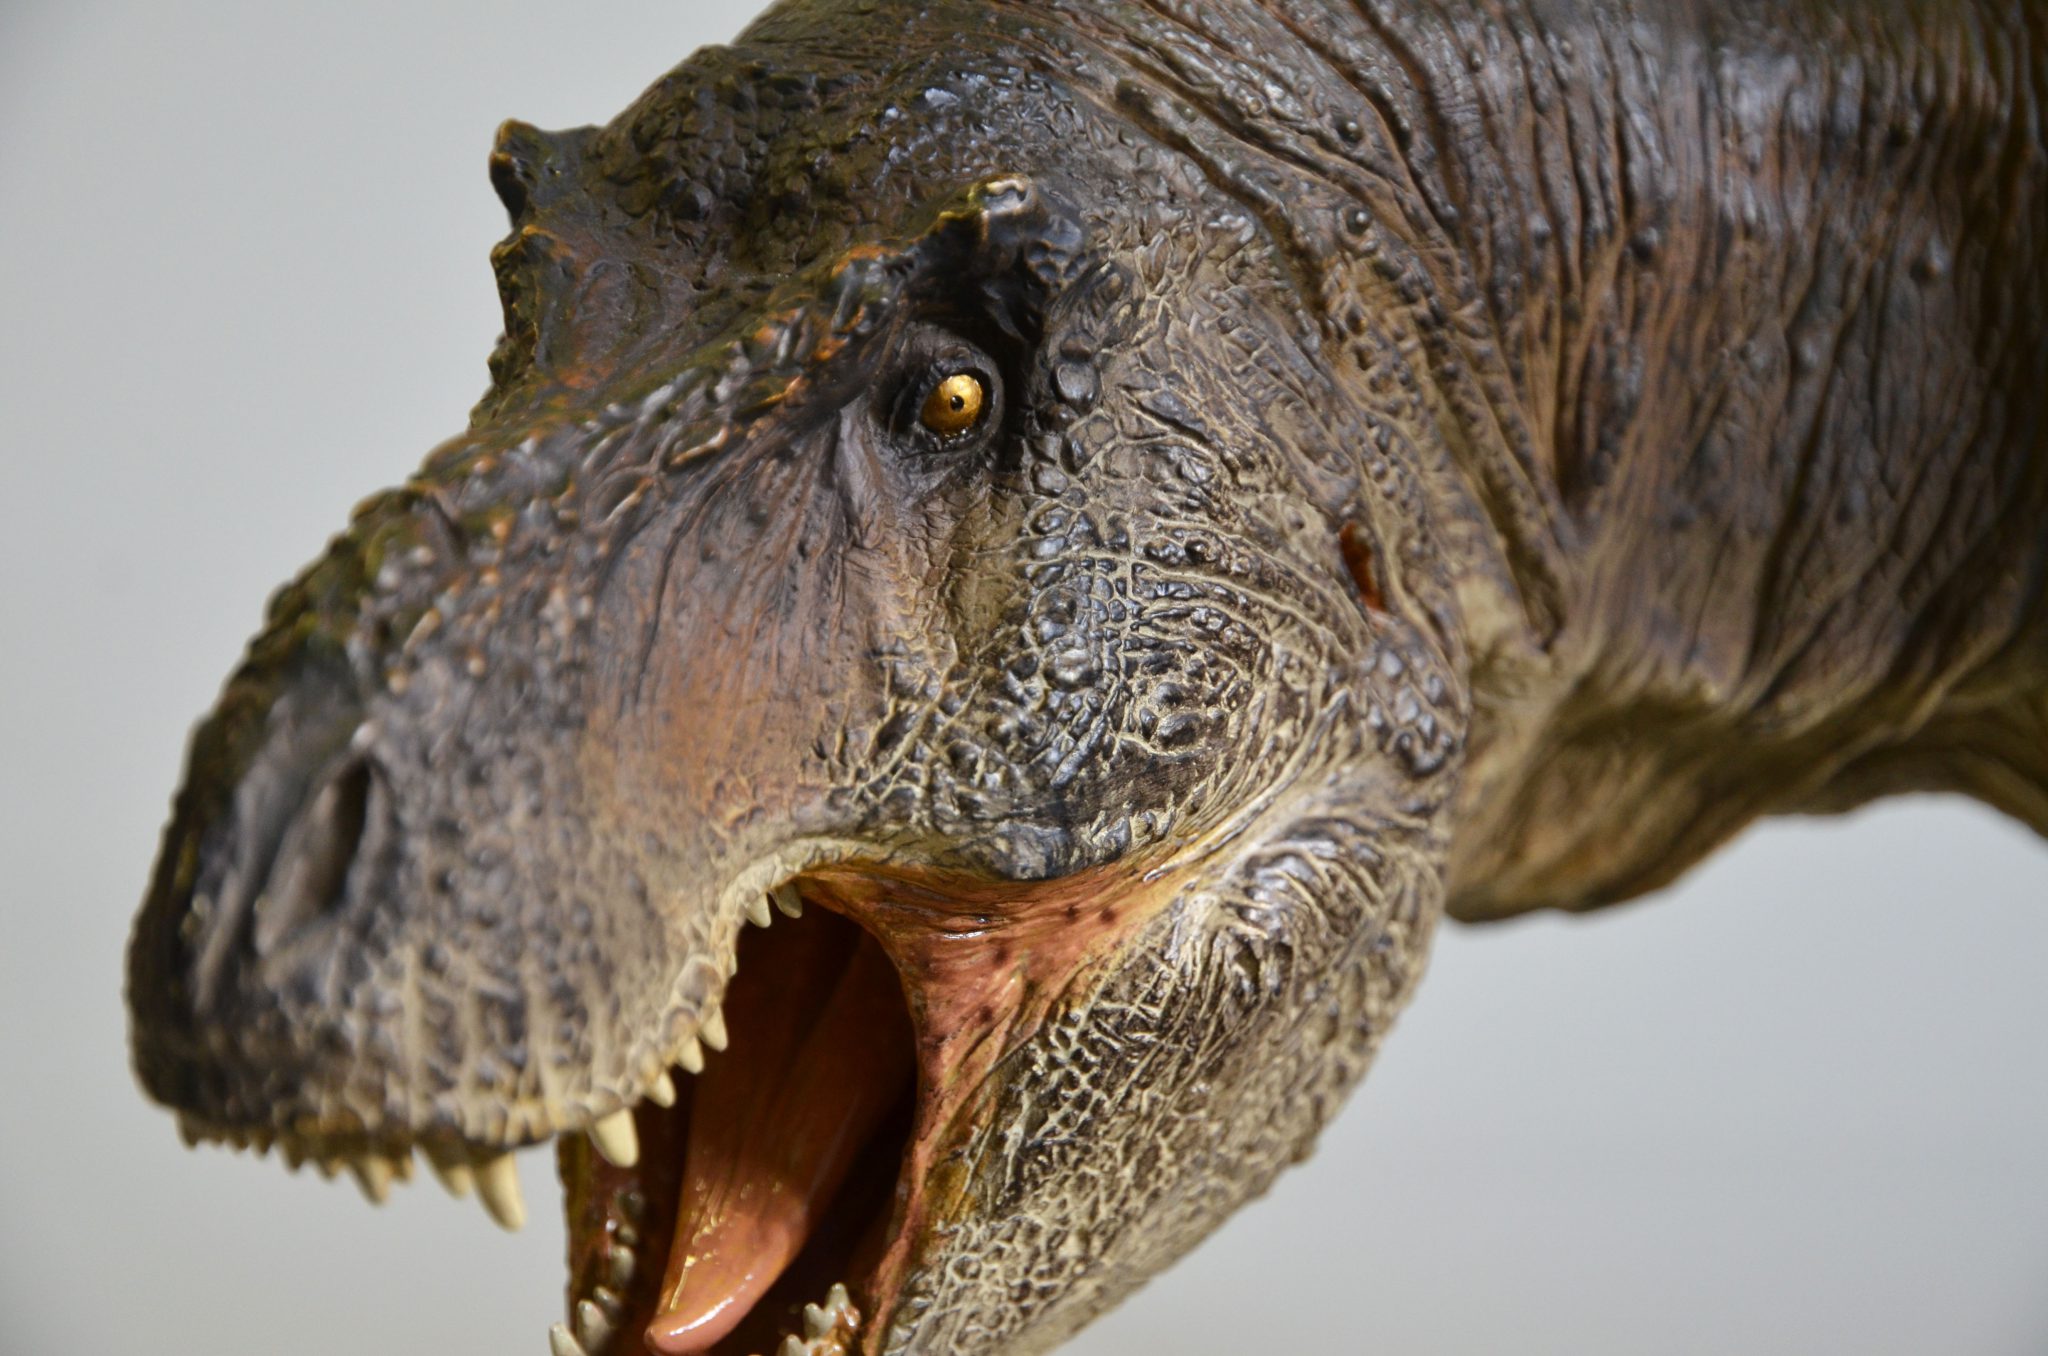 Photo of a T Rex replica artefact